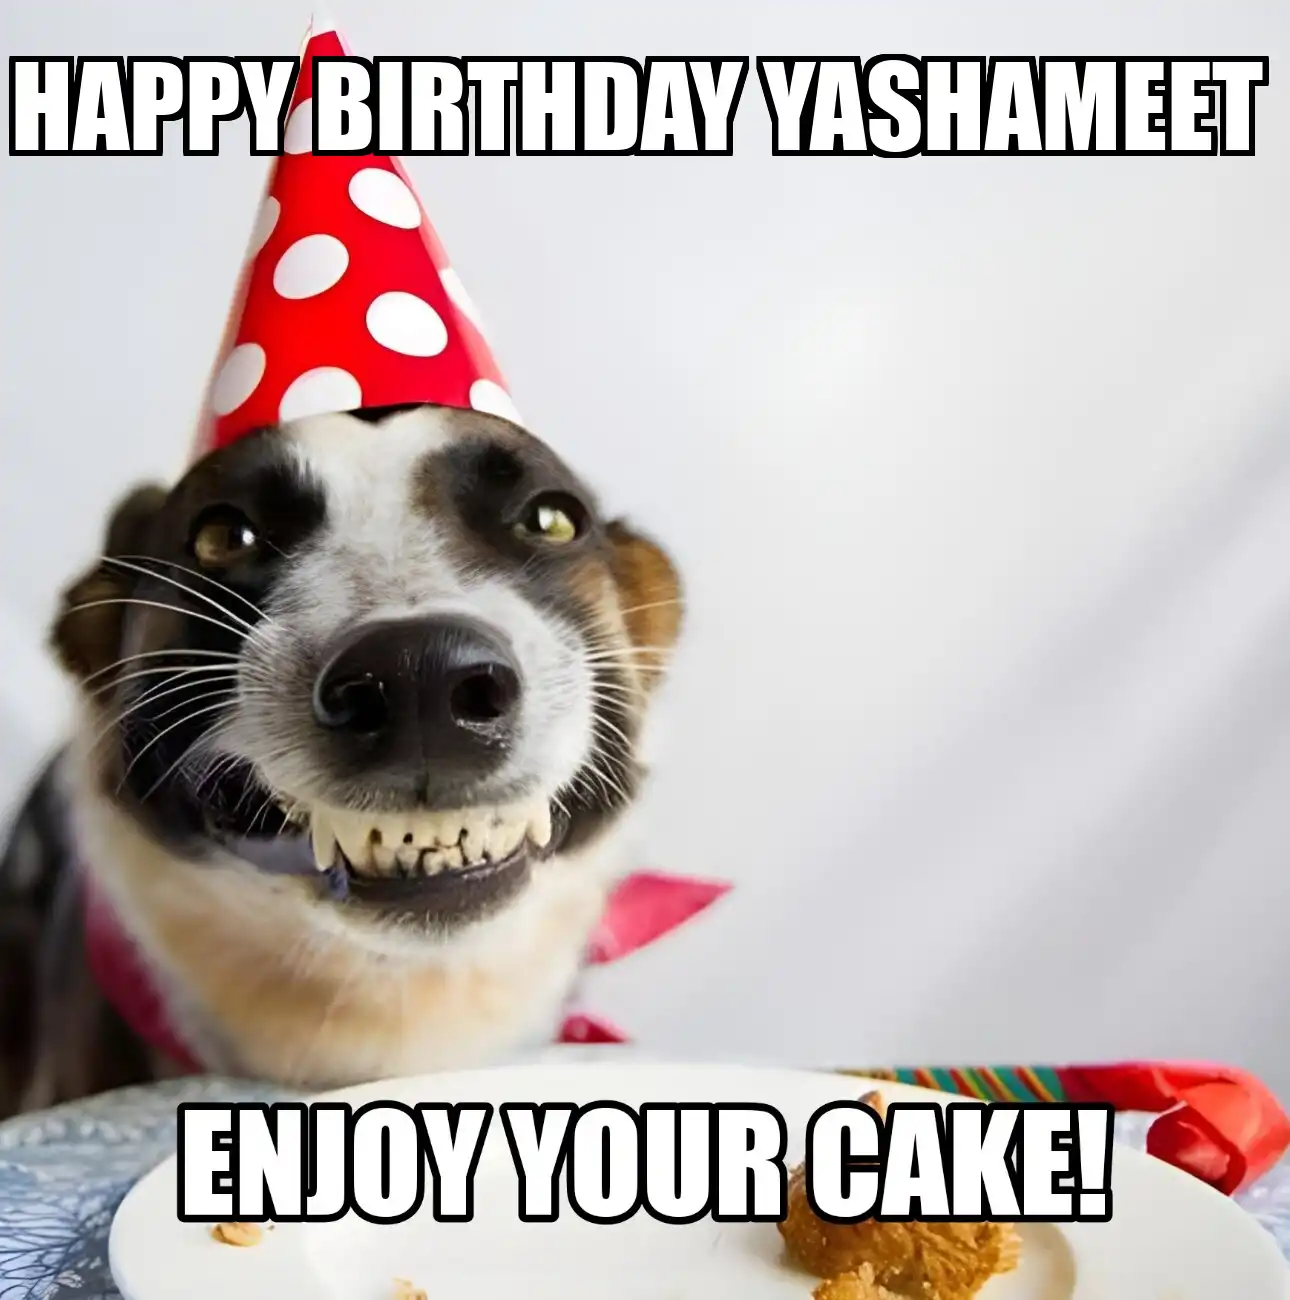 Happy Birthday Yashameet Enjoy Your Cake Dog Meme